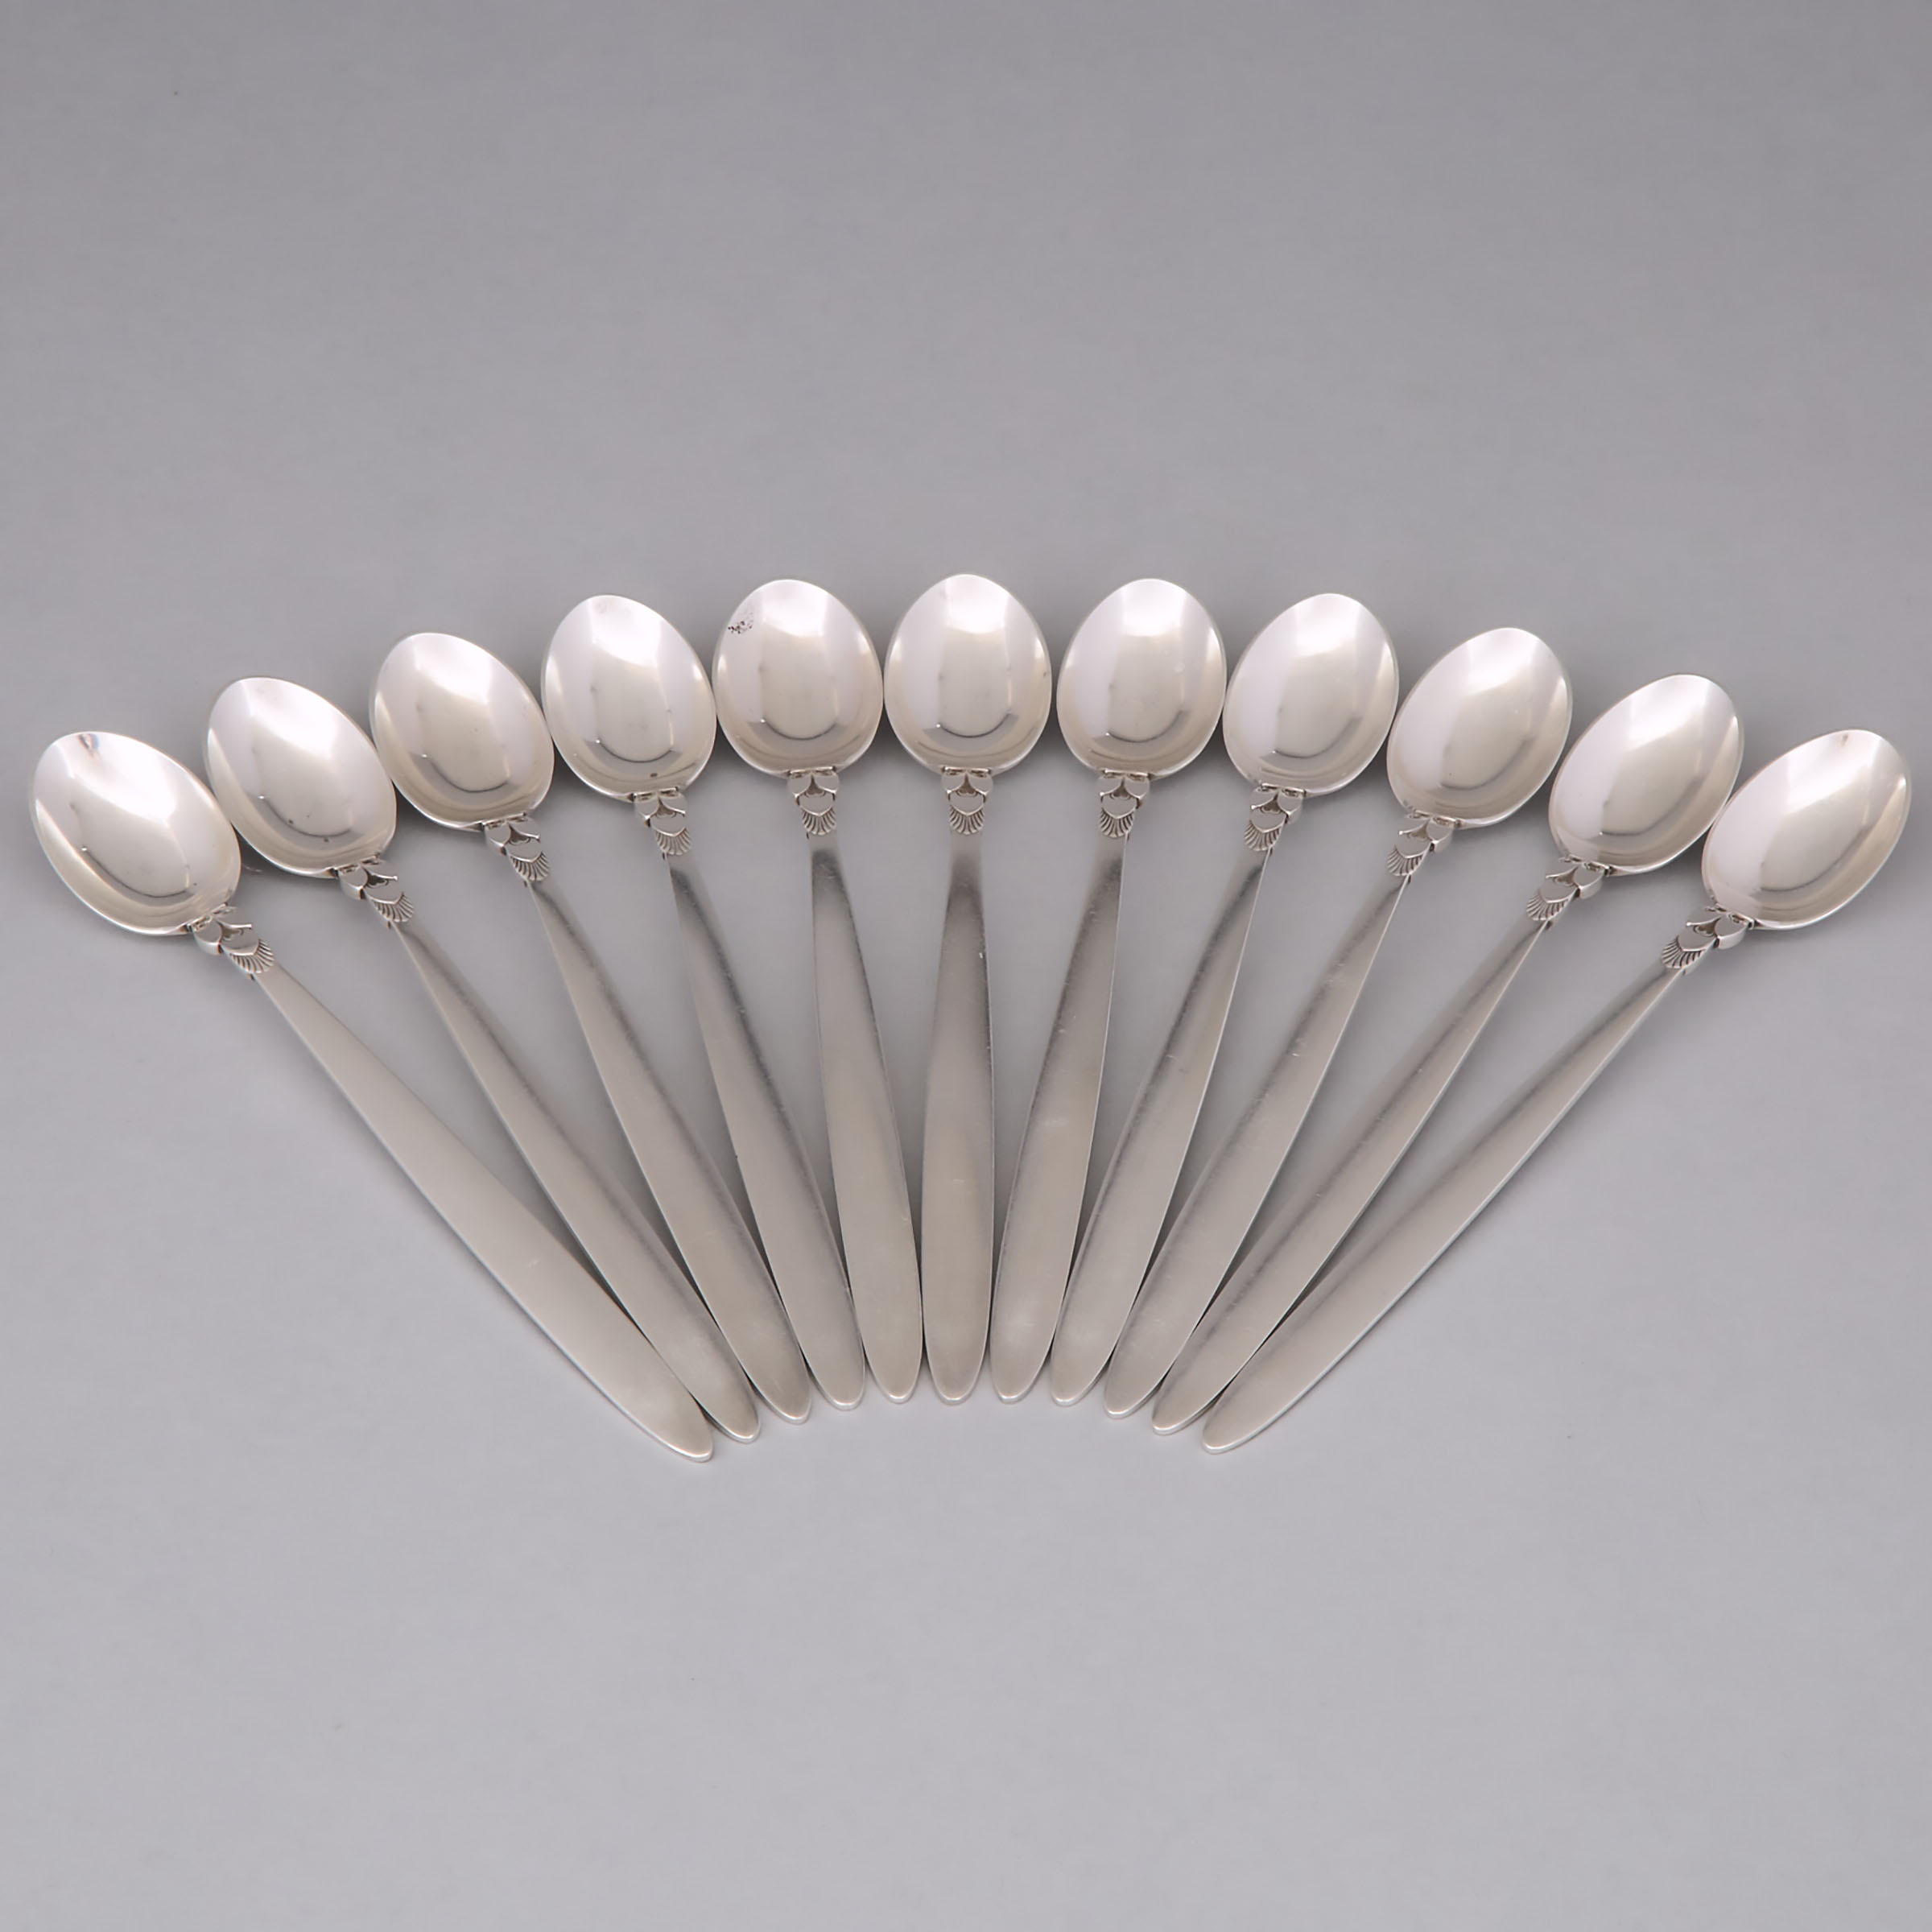 Eleven Danish Silver 'Cactus' Pattern Parfait Spoons, Gundorph Albertus for Georg Jensen, Copenhagen, c.1930